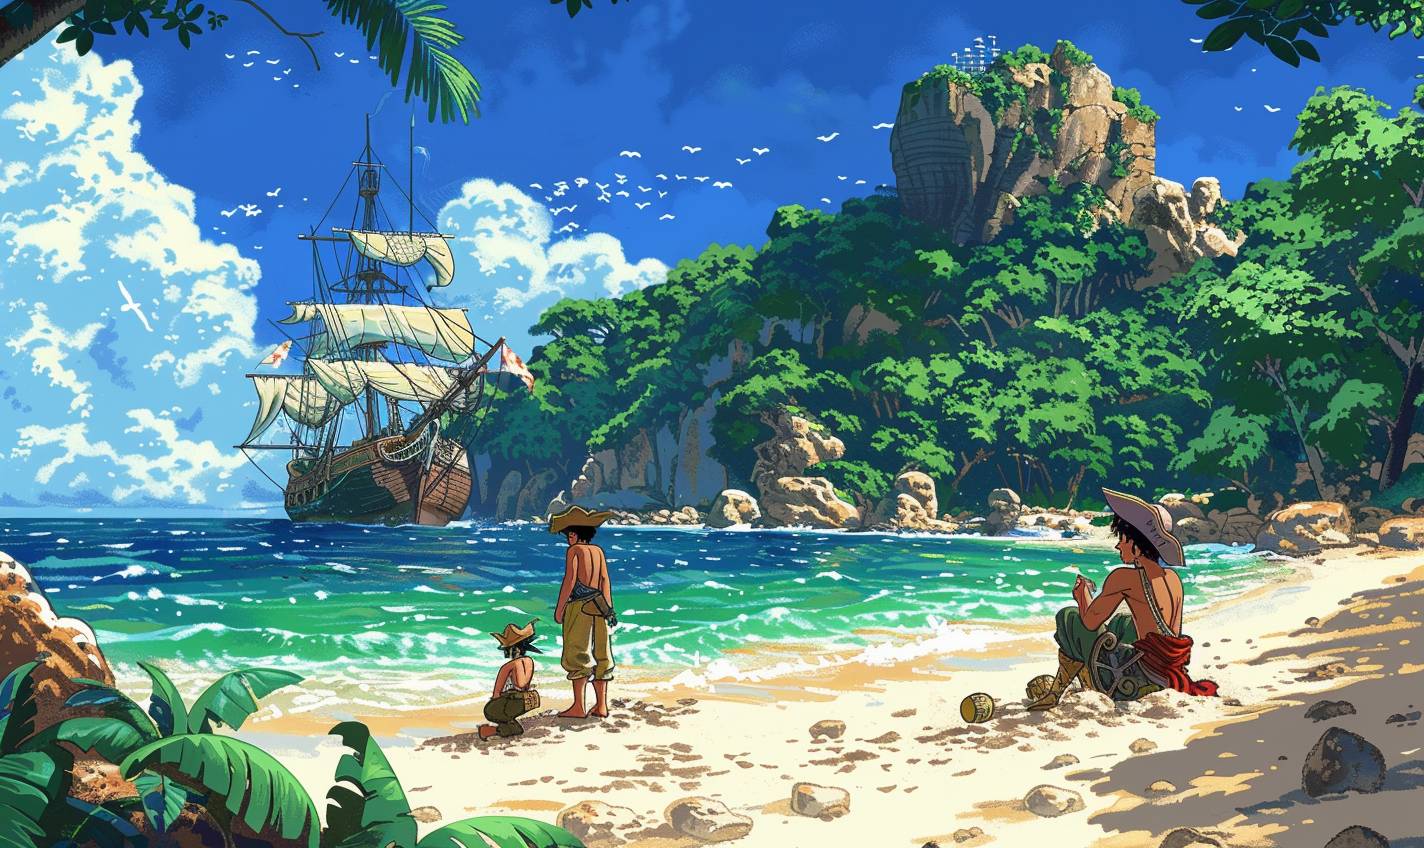 Pirate crew burying treasure on a deserted island in the style of Akira Toriyama